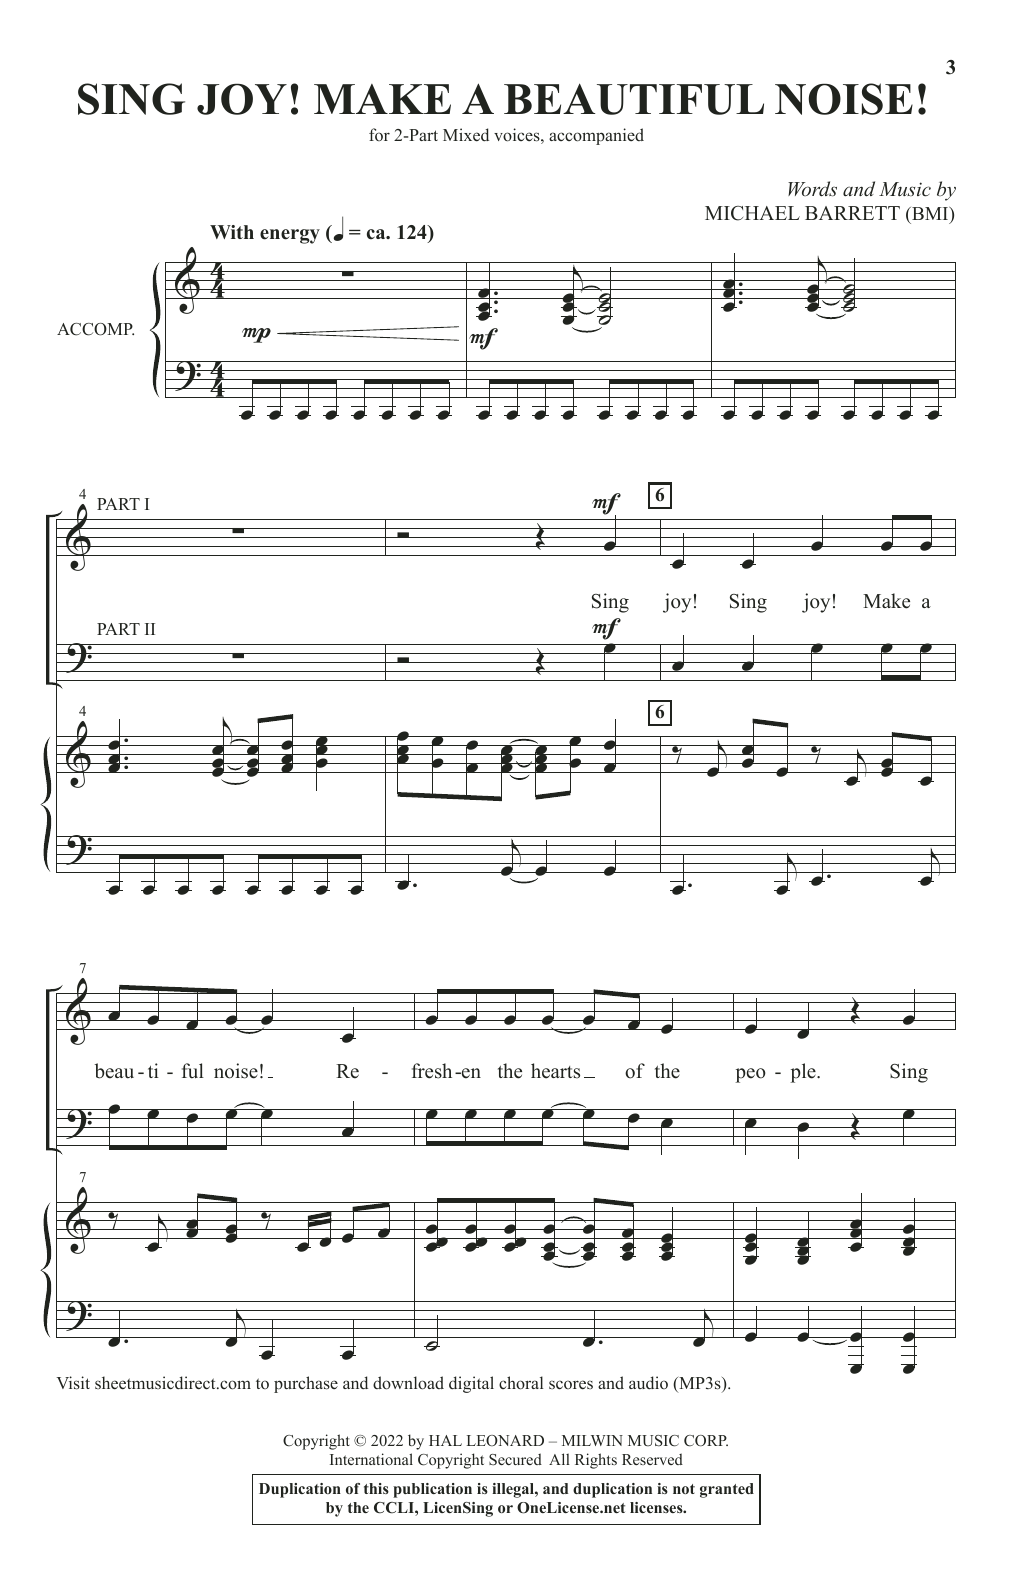 Michael Barrett Sing Joy! Make A Beautiful Noise! sheet music notes and chords arranged for 2-Part Choir